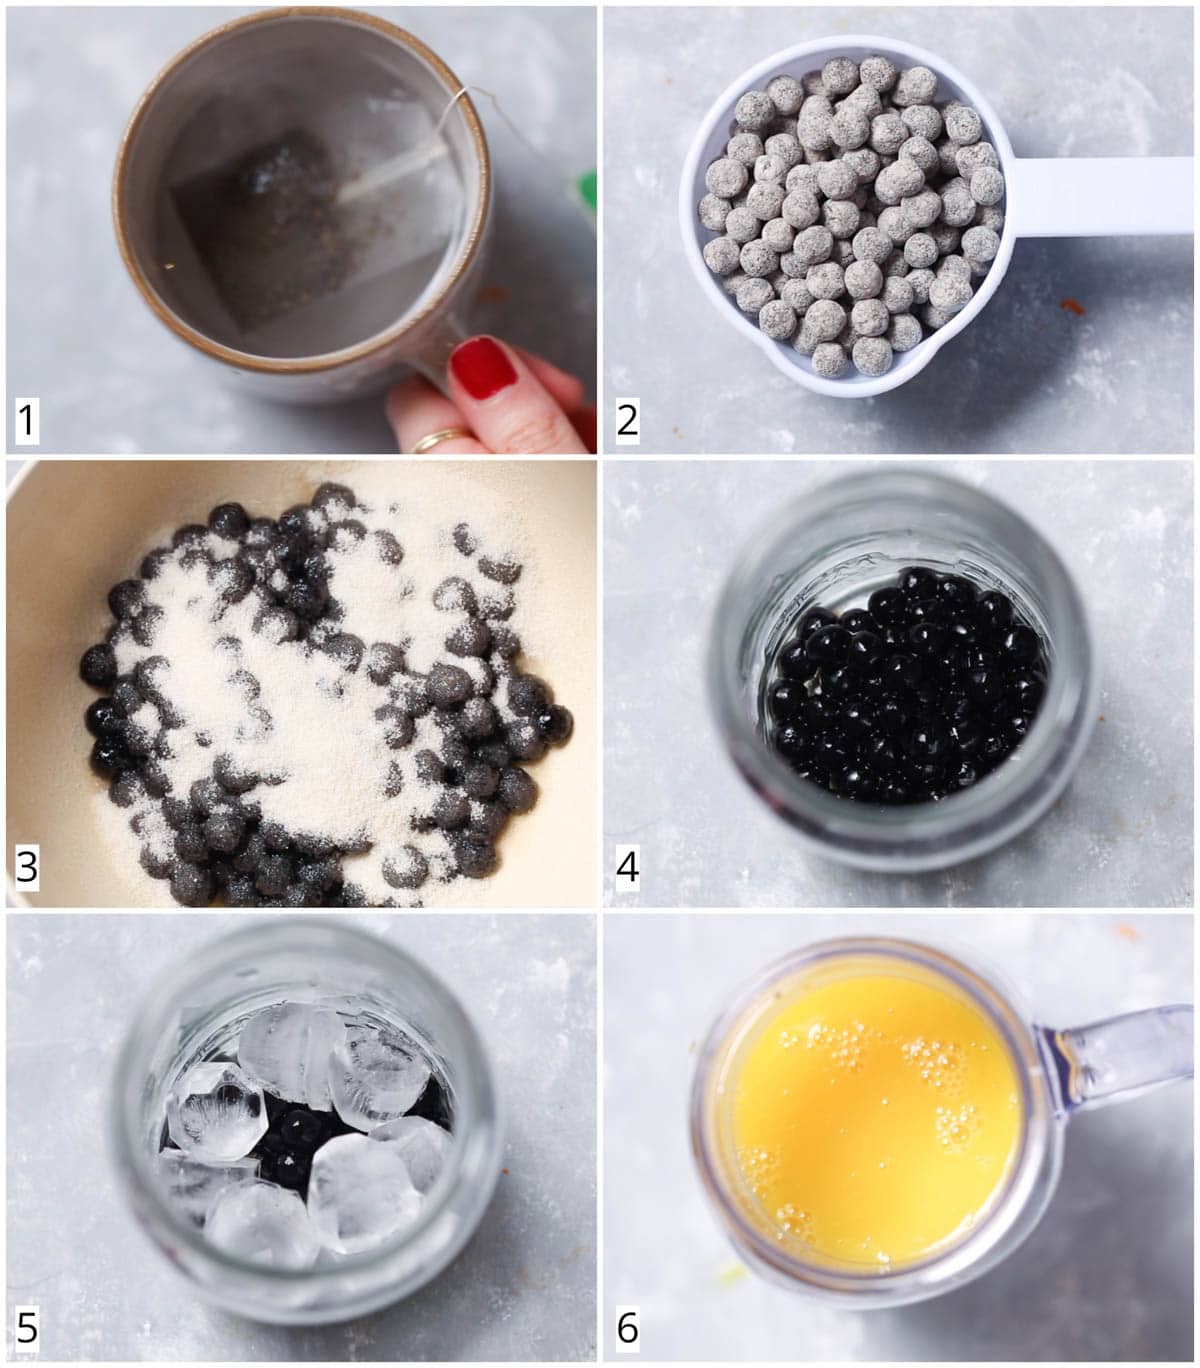 6 images showing how to make mango bubble milk tea.